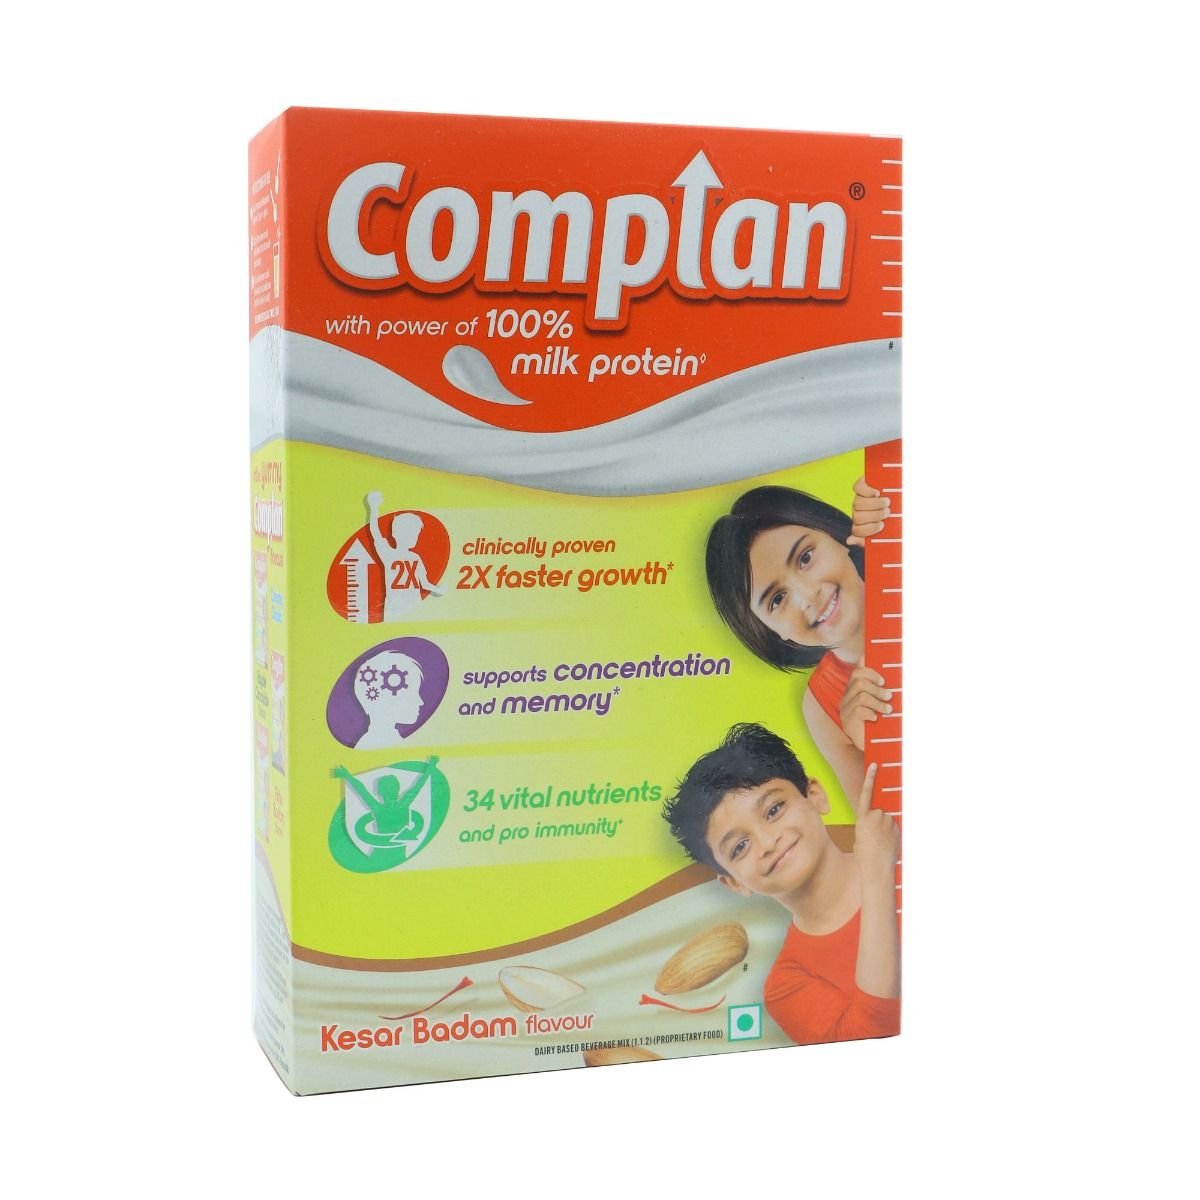 Buy Complan Kesar Badam Flavoured Health & Nutrition Drink, 500 gm Refill Pack Online